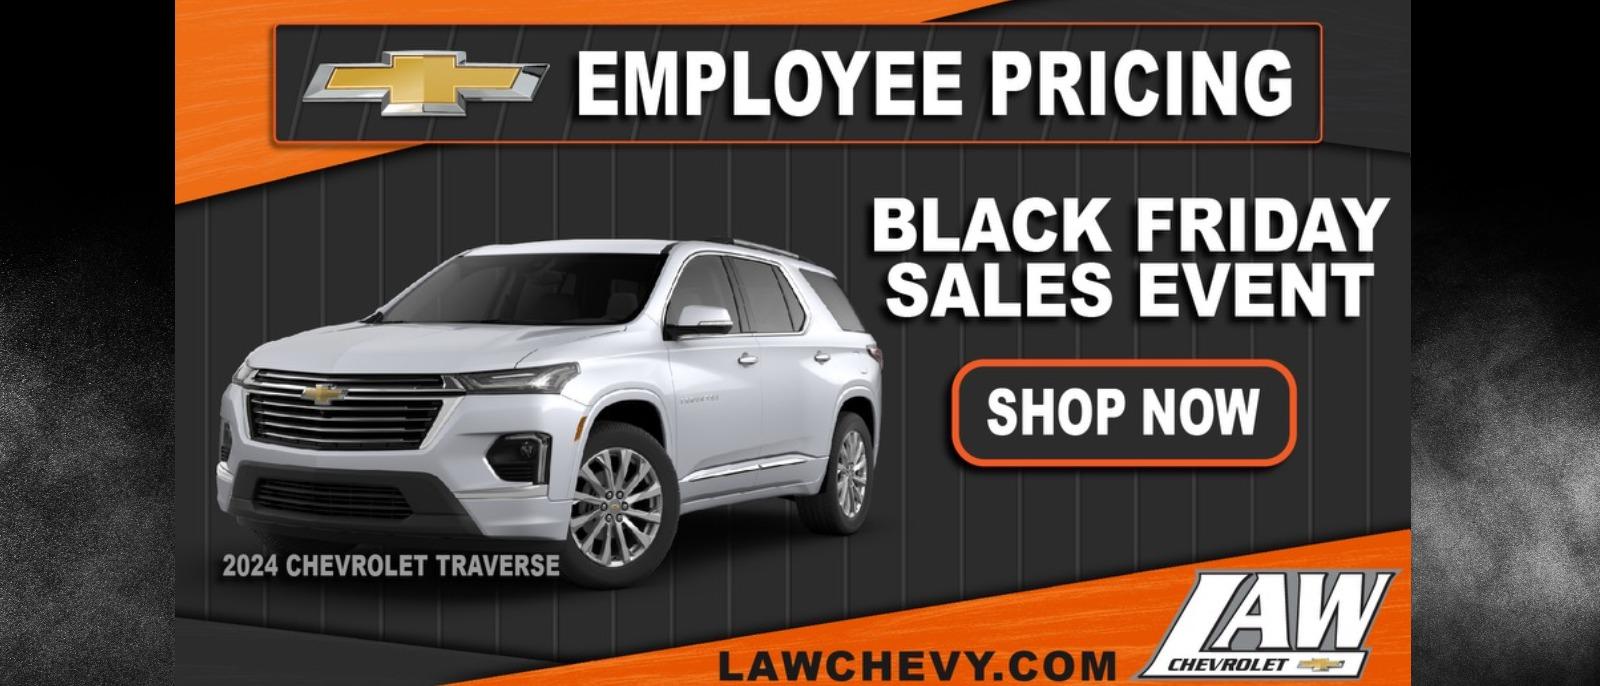 Black friday sales event
2024 Chevrolet Traverse